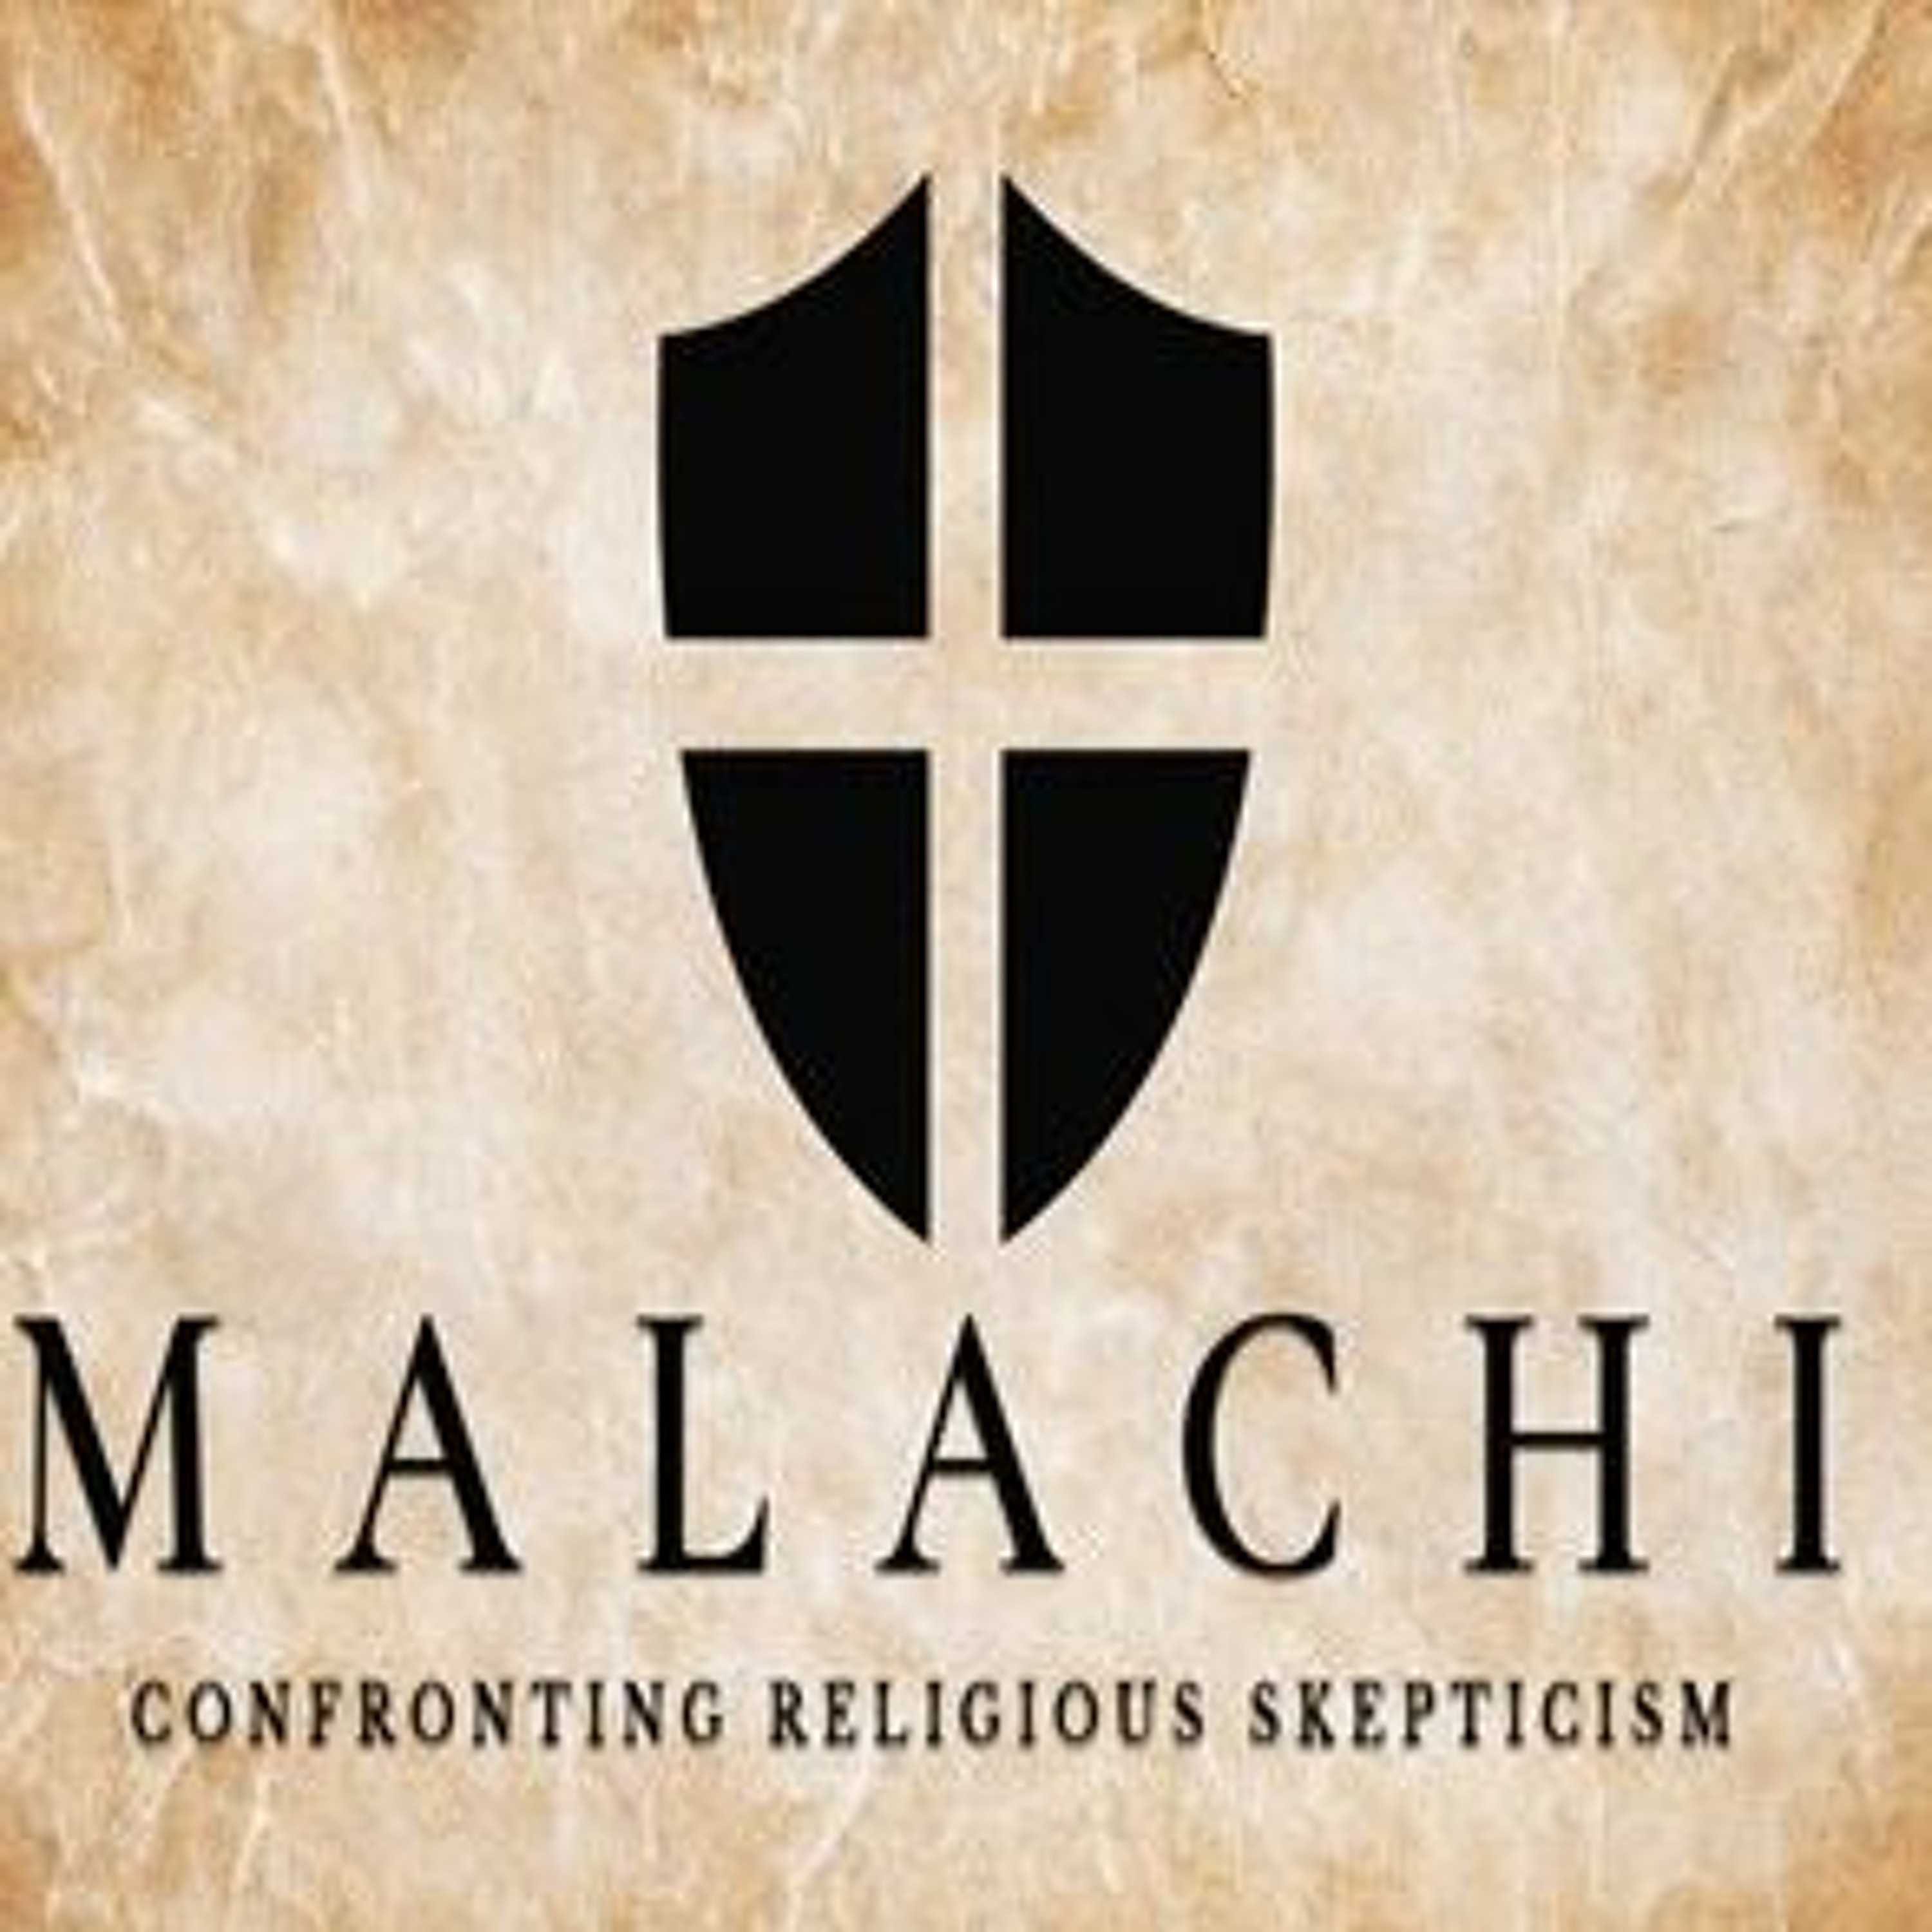 A Weighty Message (Malachi 1:1)